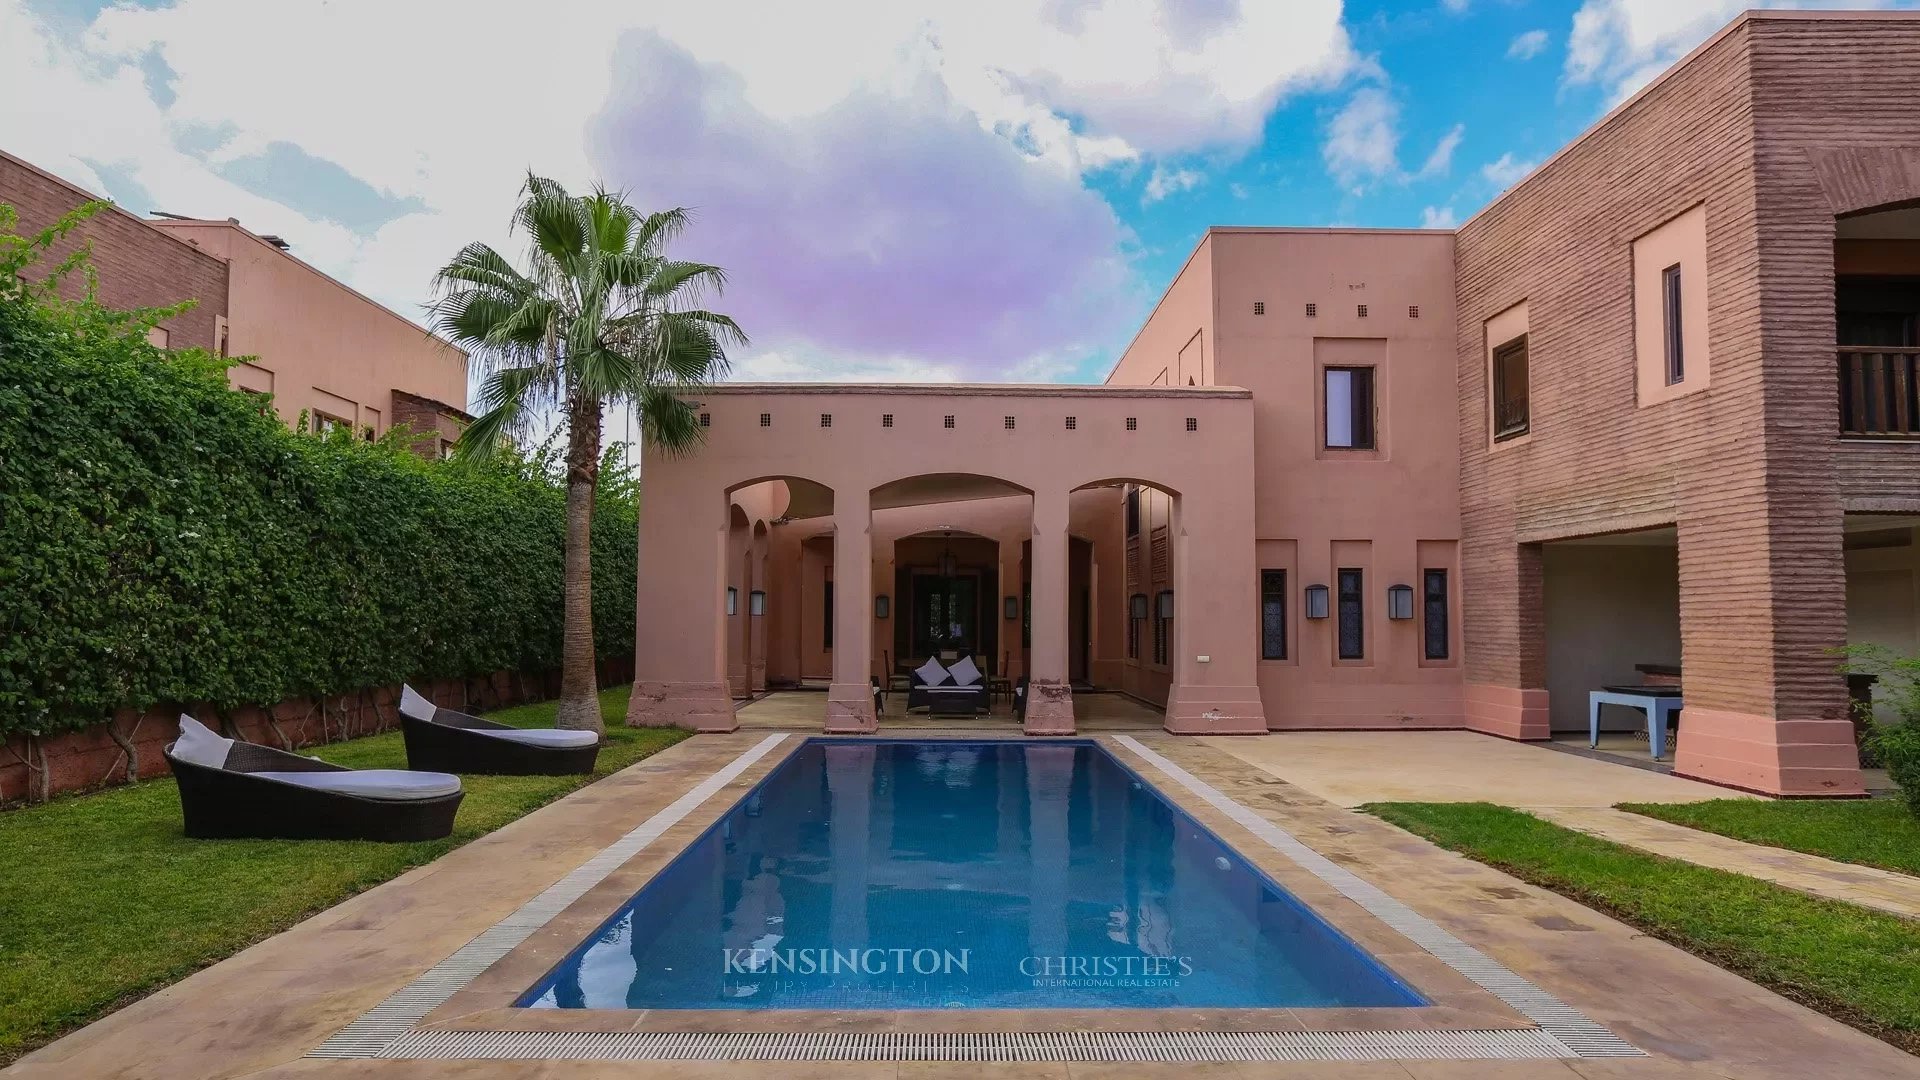 Villa Ighli in Marrakech, Morocco